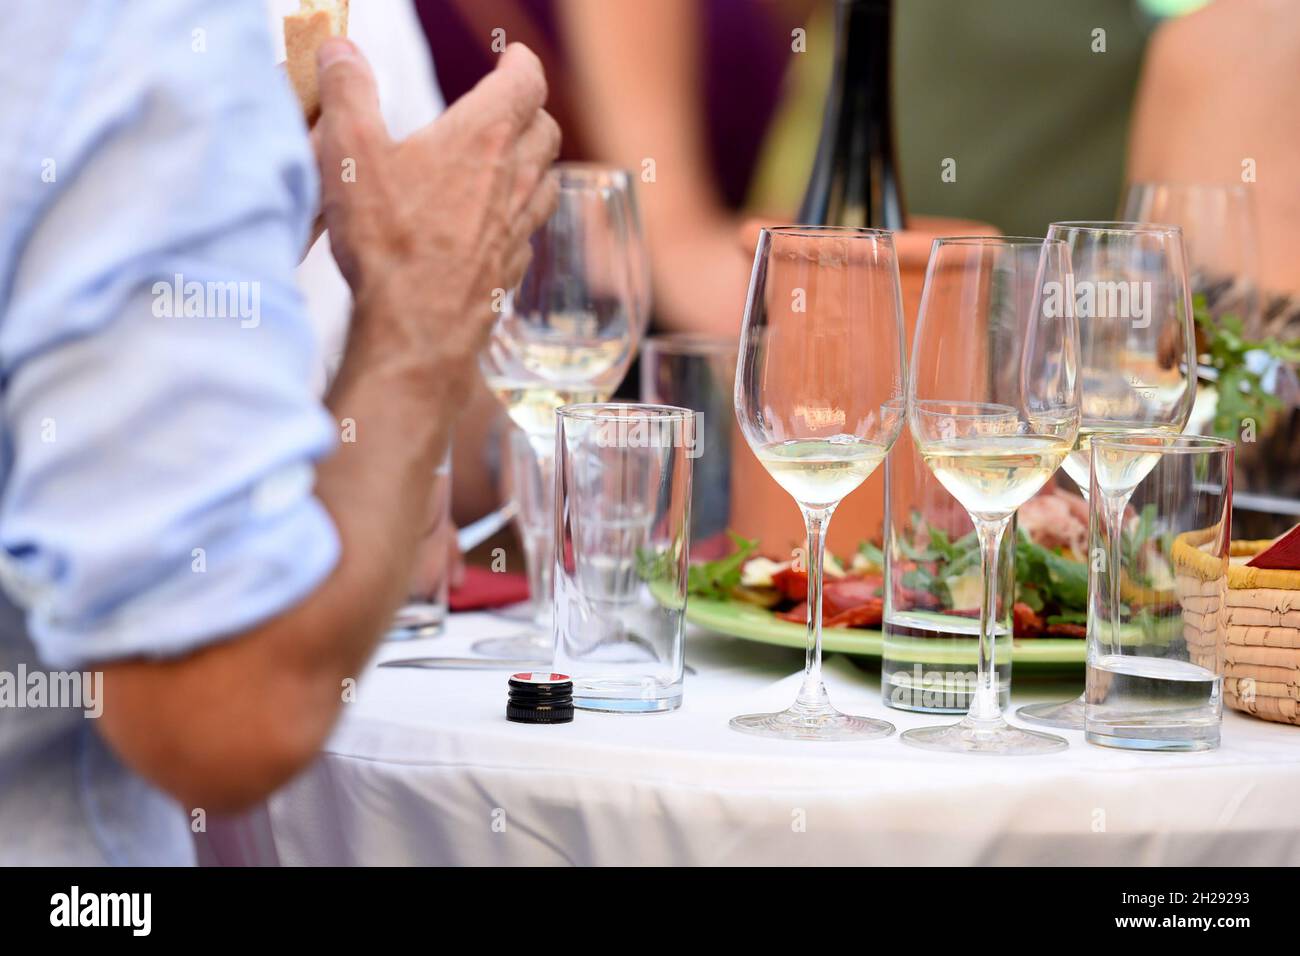 Einige Weingläser auf einem Stehtisch im Sommer - Algunas copas de vino en una mesa de bar en verano Foto de stock